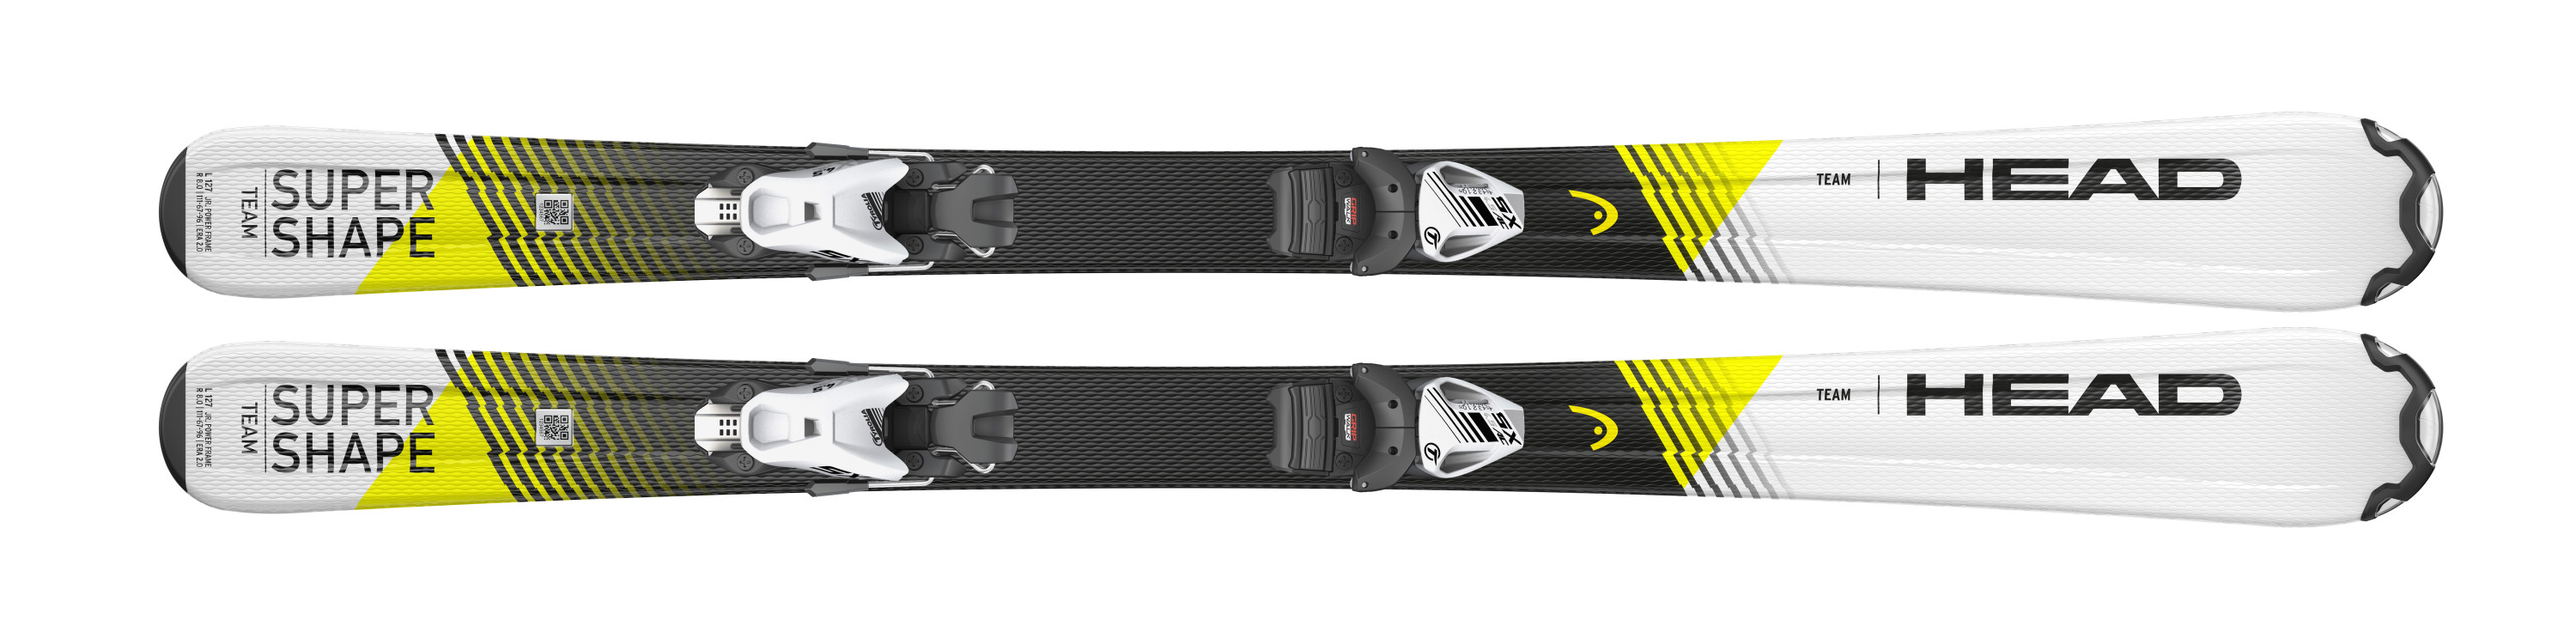 Горные лыжи HEAD SupershapeTeam + креп. SX 4.5 GW